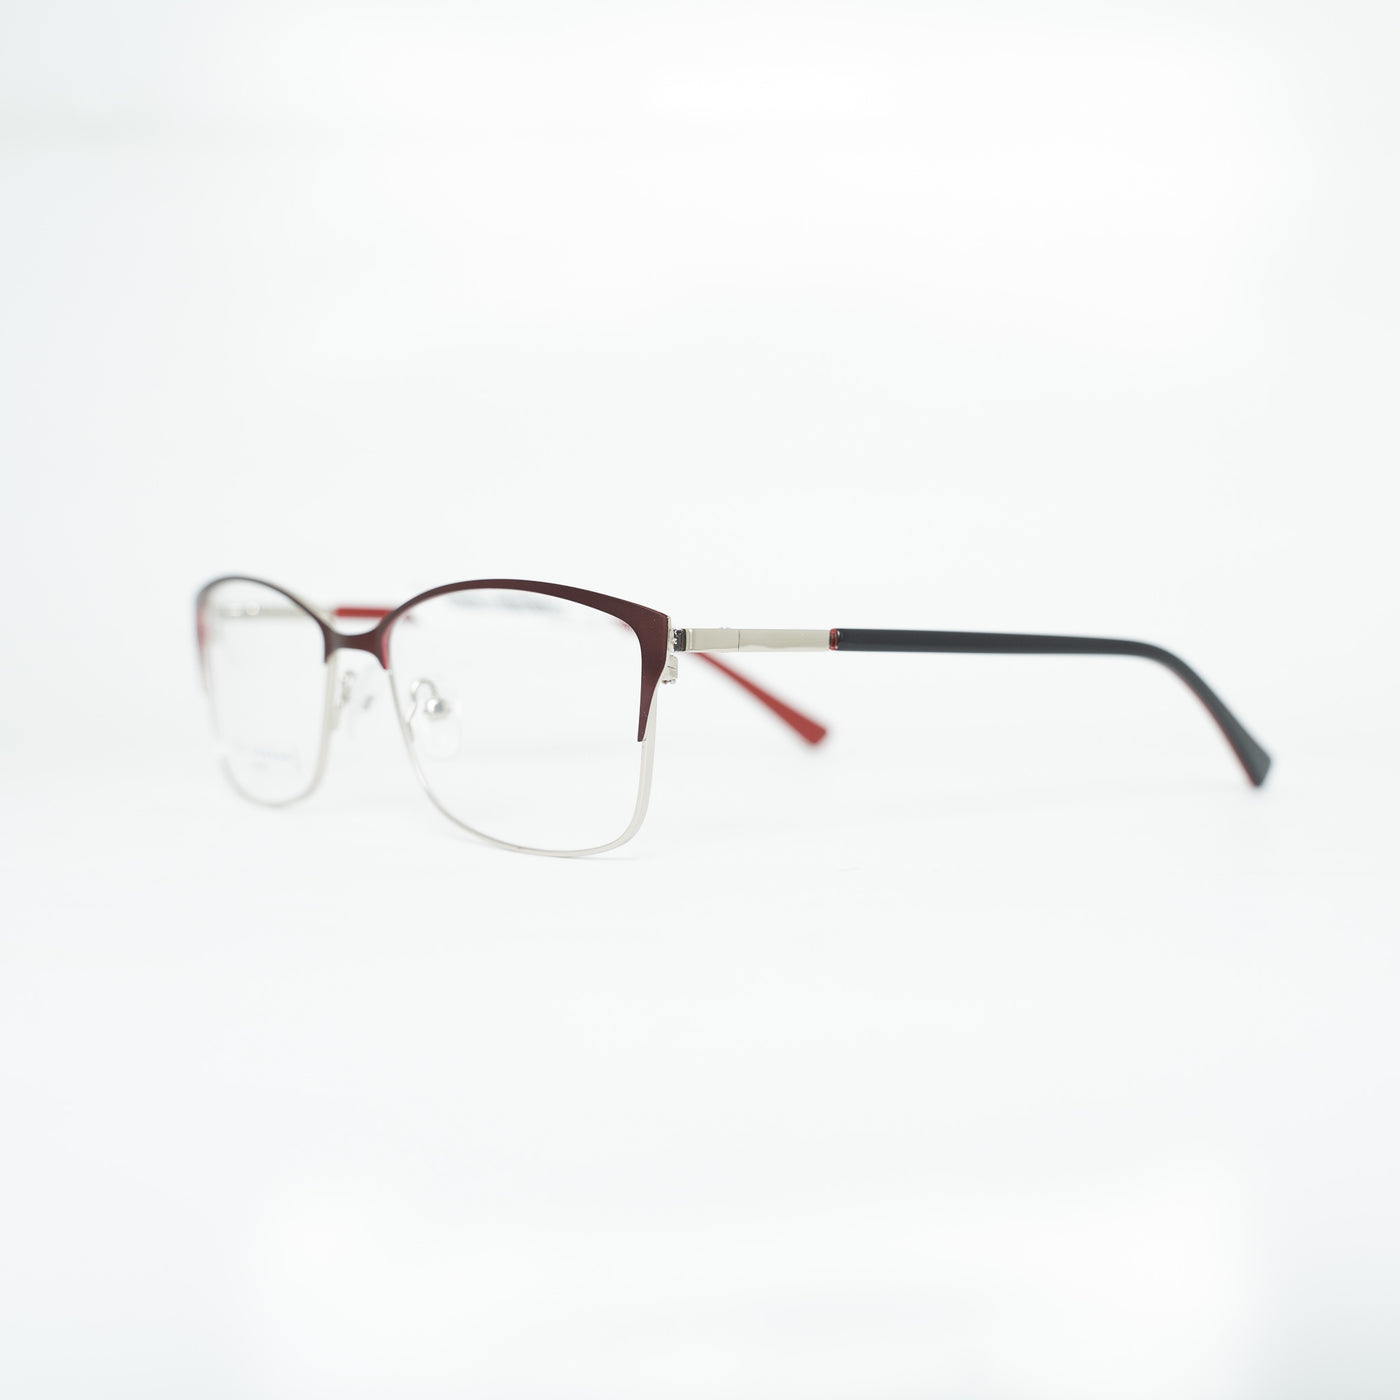 Tony Morgan TM4284RED53 | Eyeglasses - Vision Express Optical Philippines